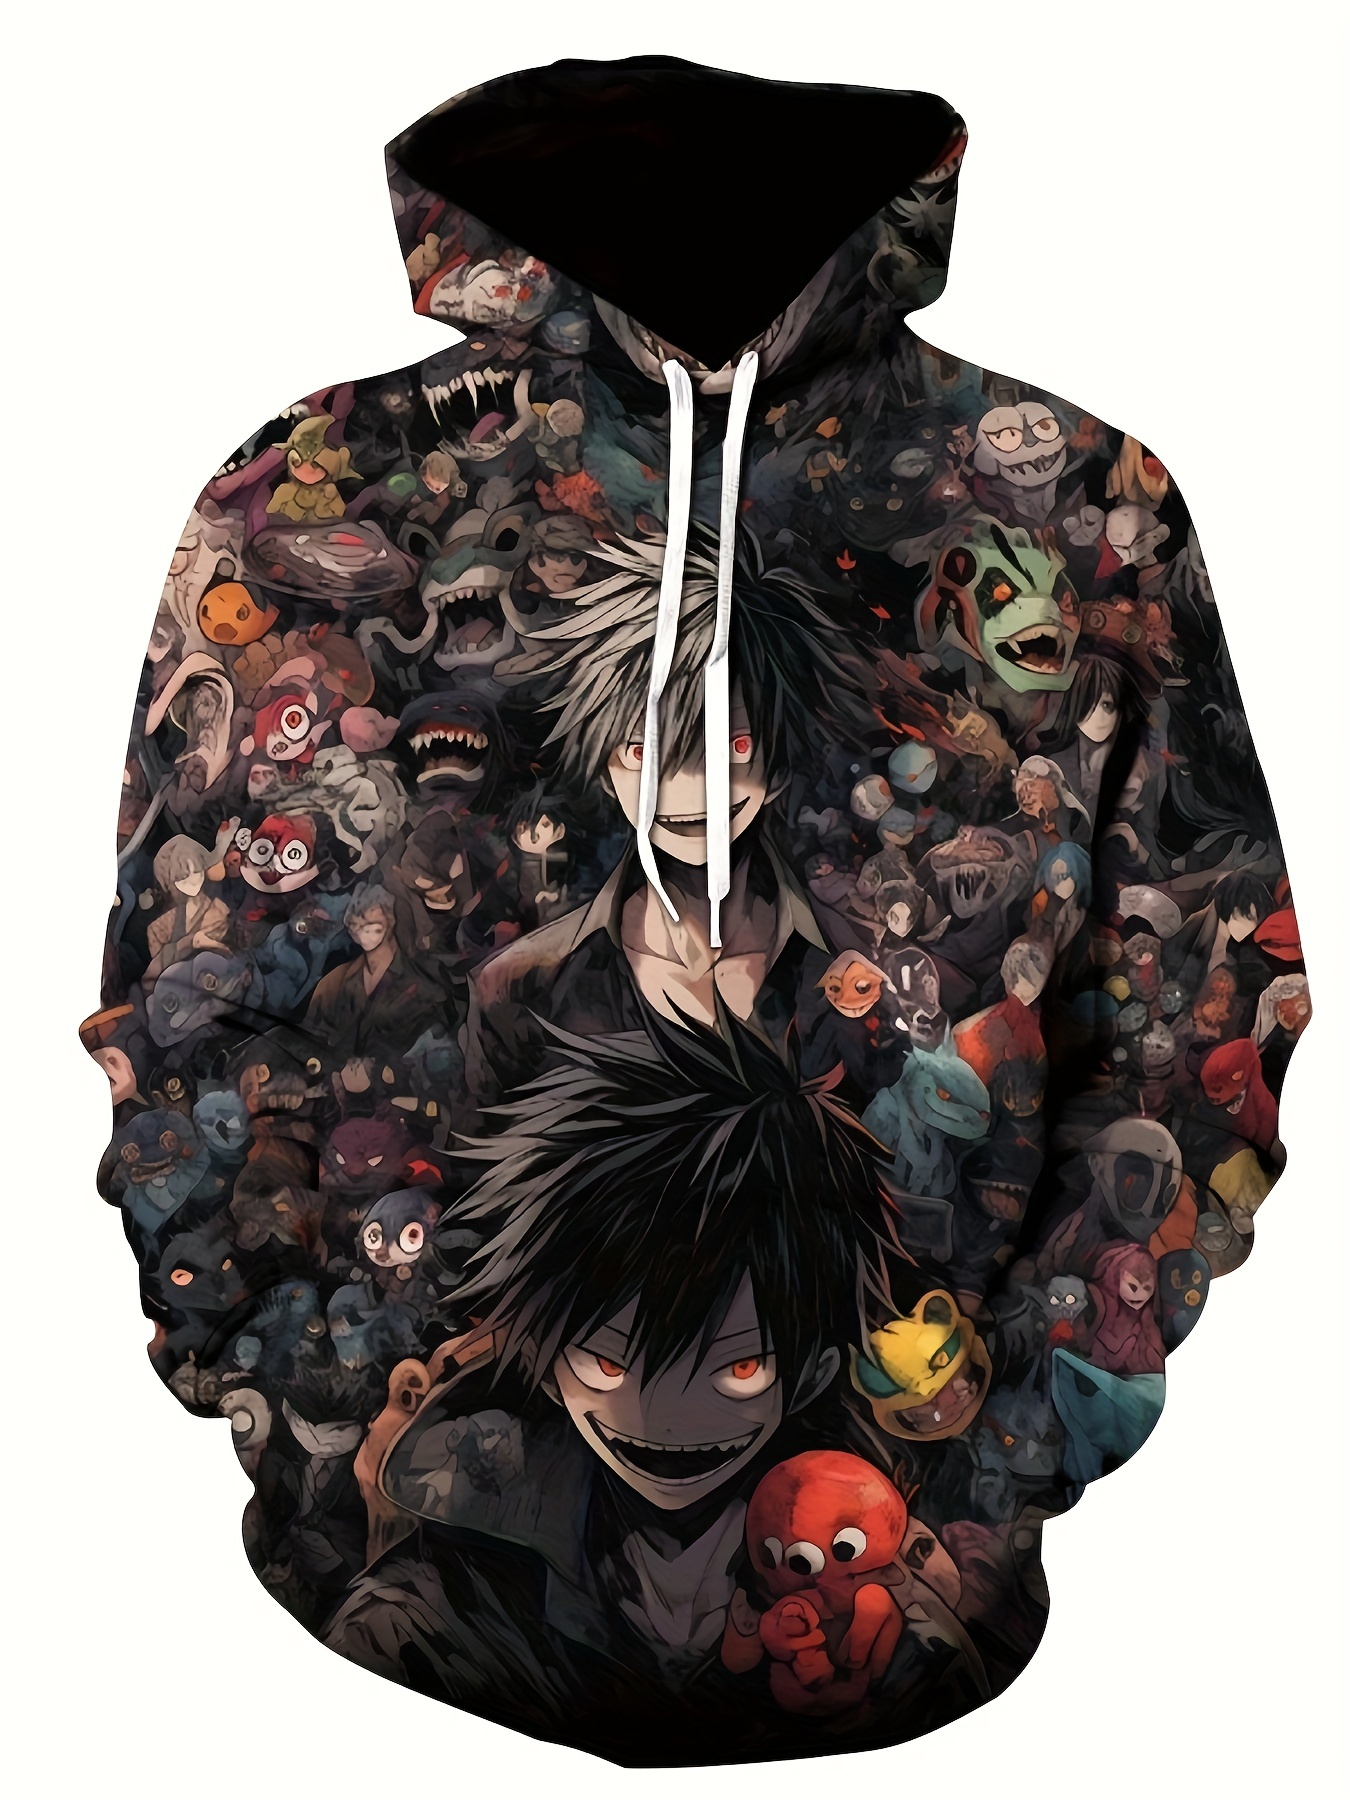 Anime 2 full graphic hoodie